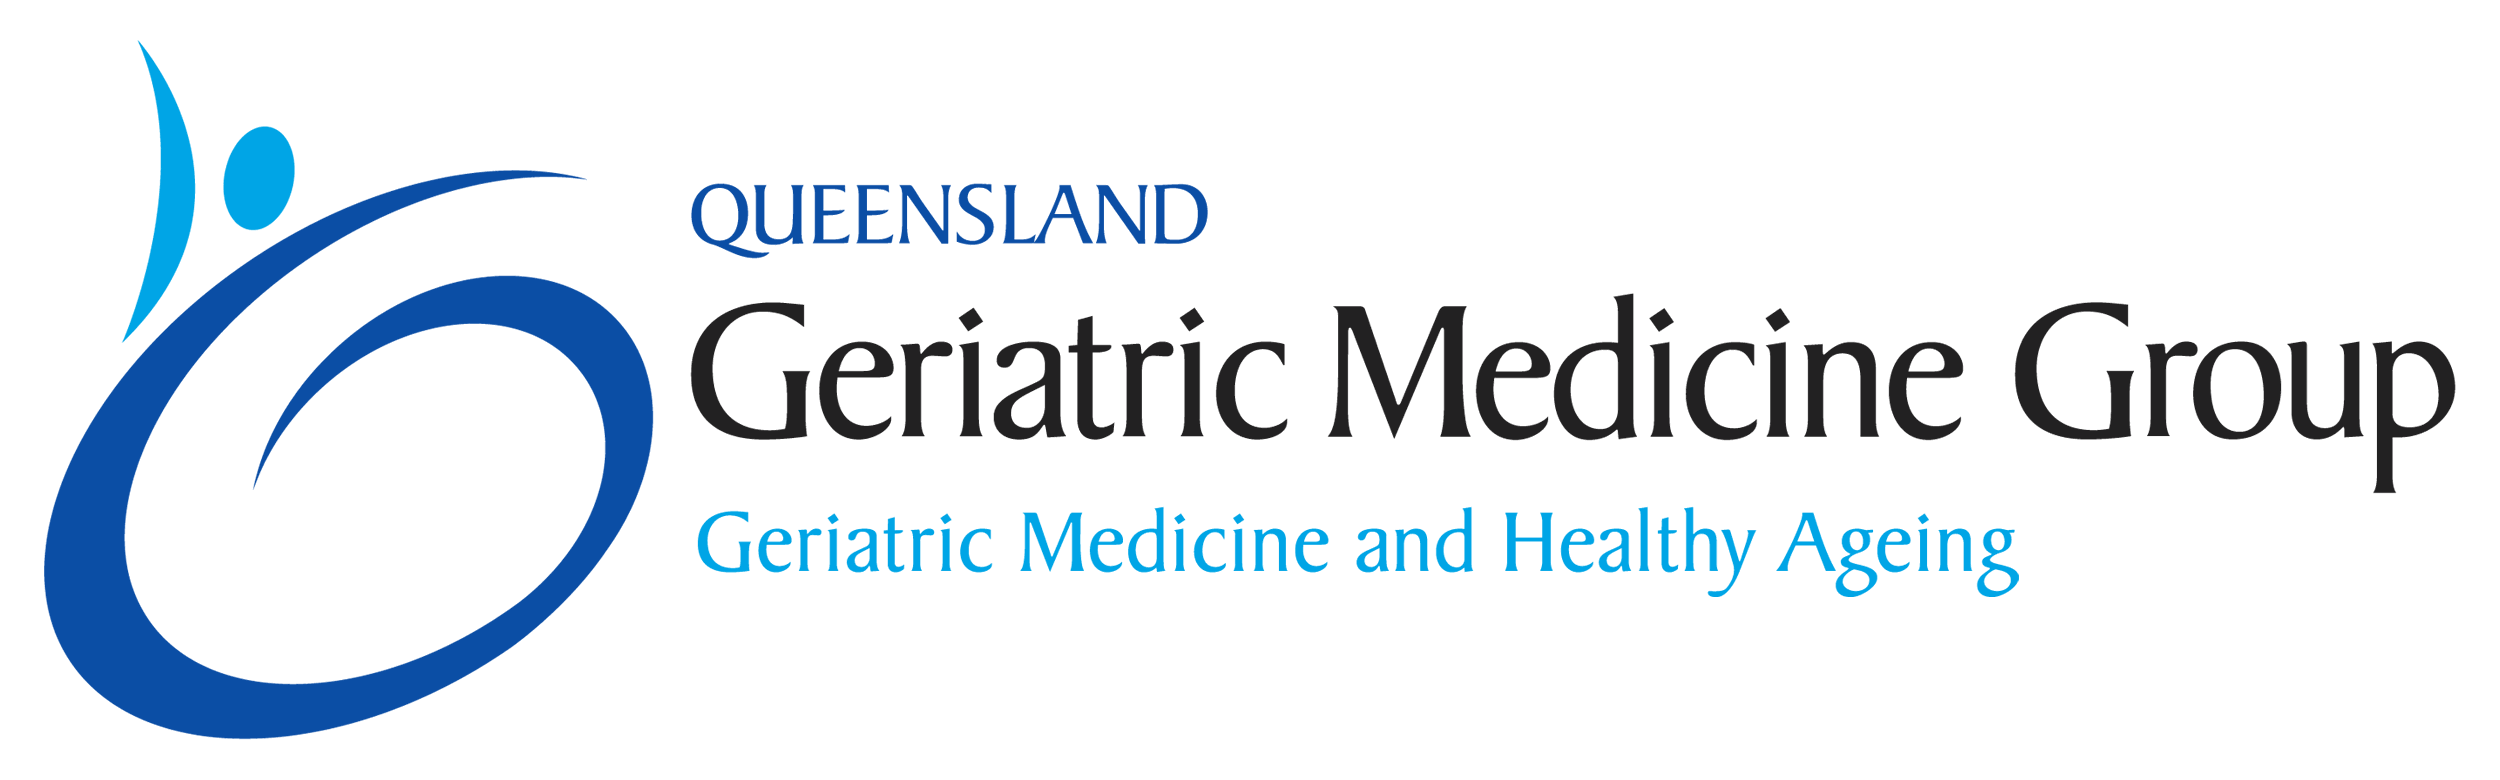 Queensland Geriatric Medicine Group